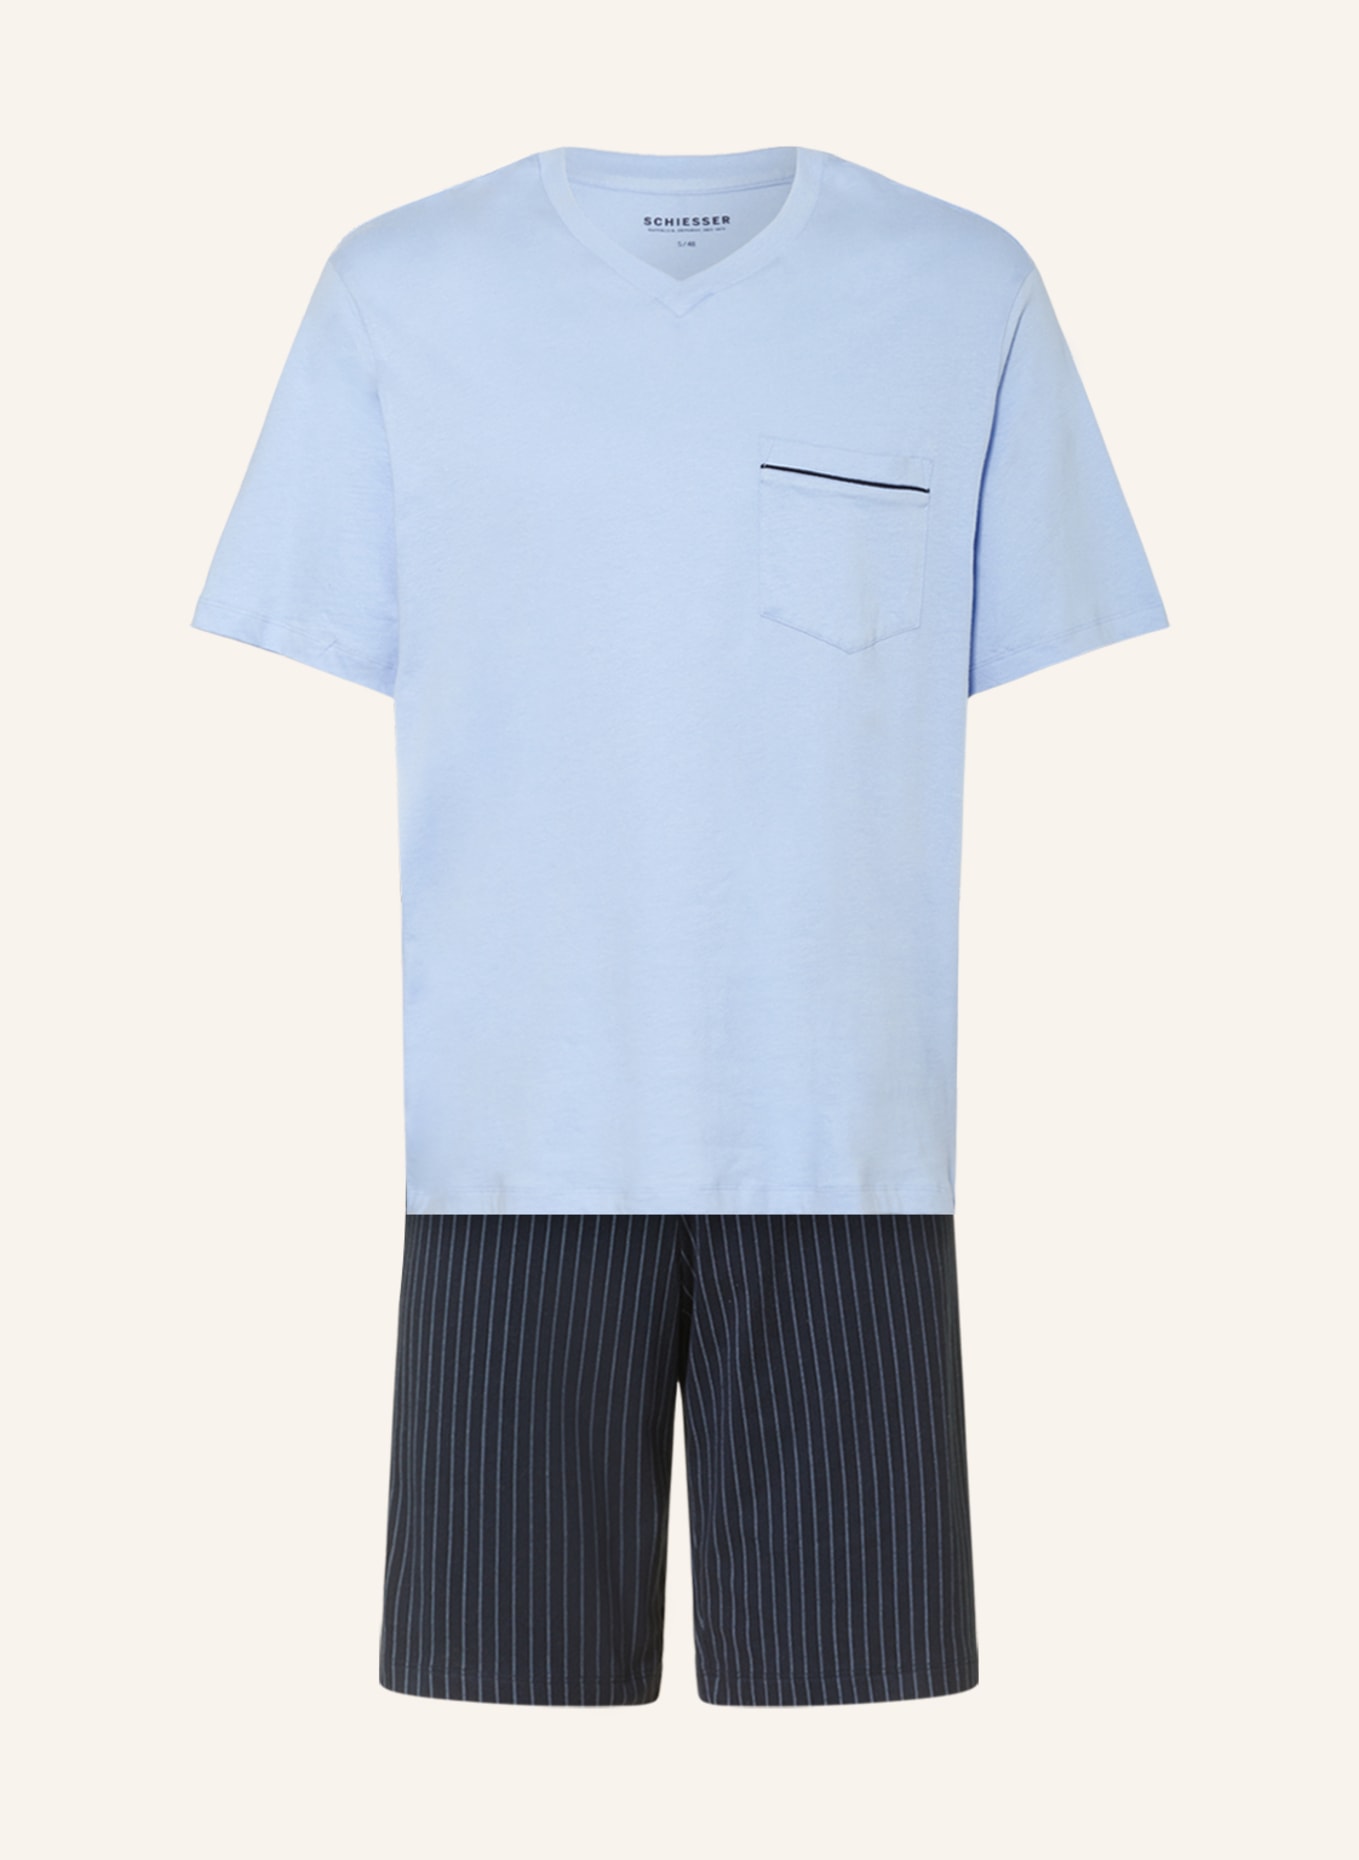 SCHIESSER Shorty pajamas COMFORT FIT light blue blue/ in dark